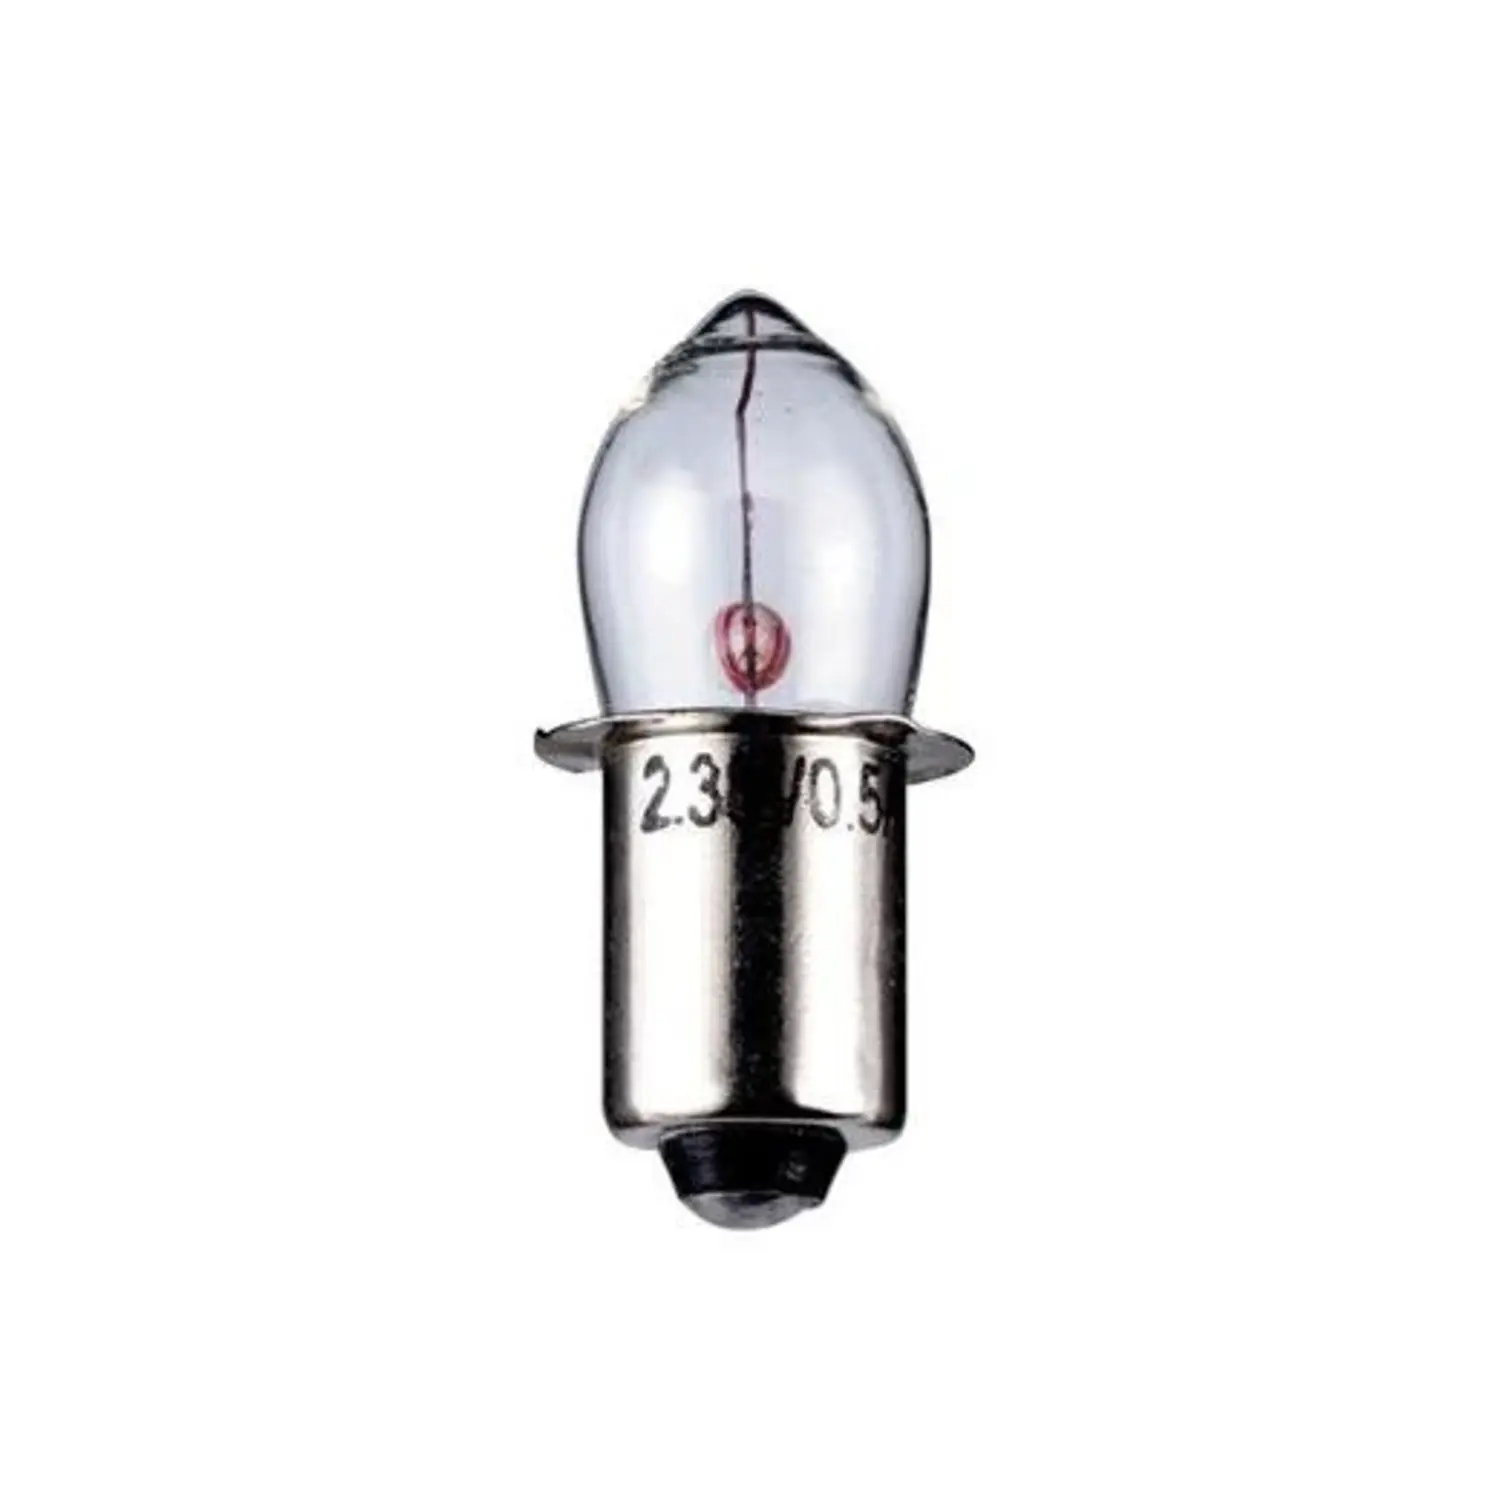 immagine del prodotto lampadina prefocus p13.5 per torcia portatile 0,75 watt 2,5 volt